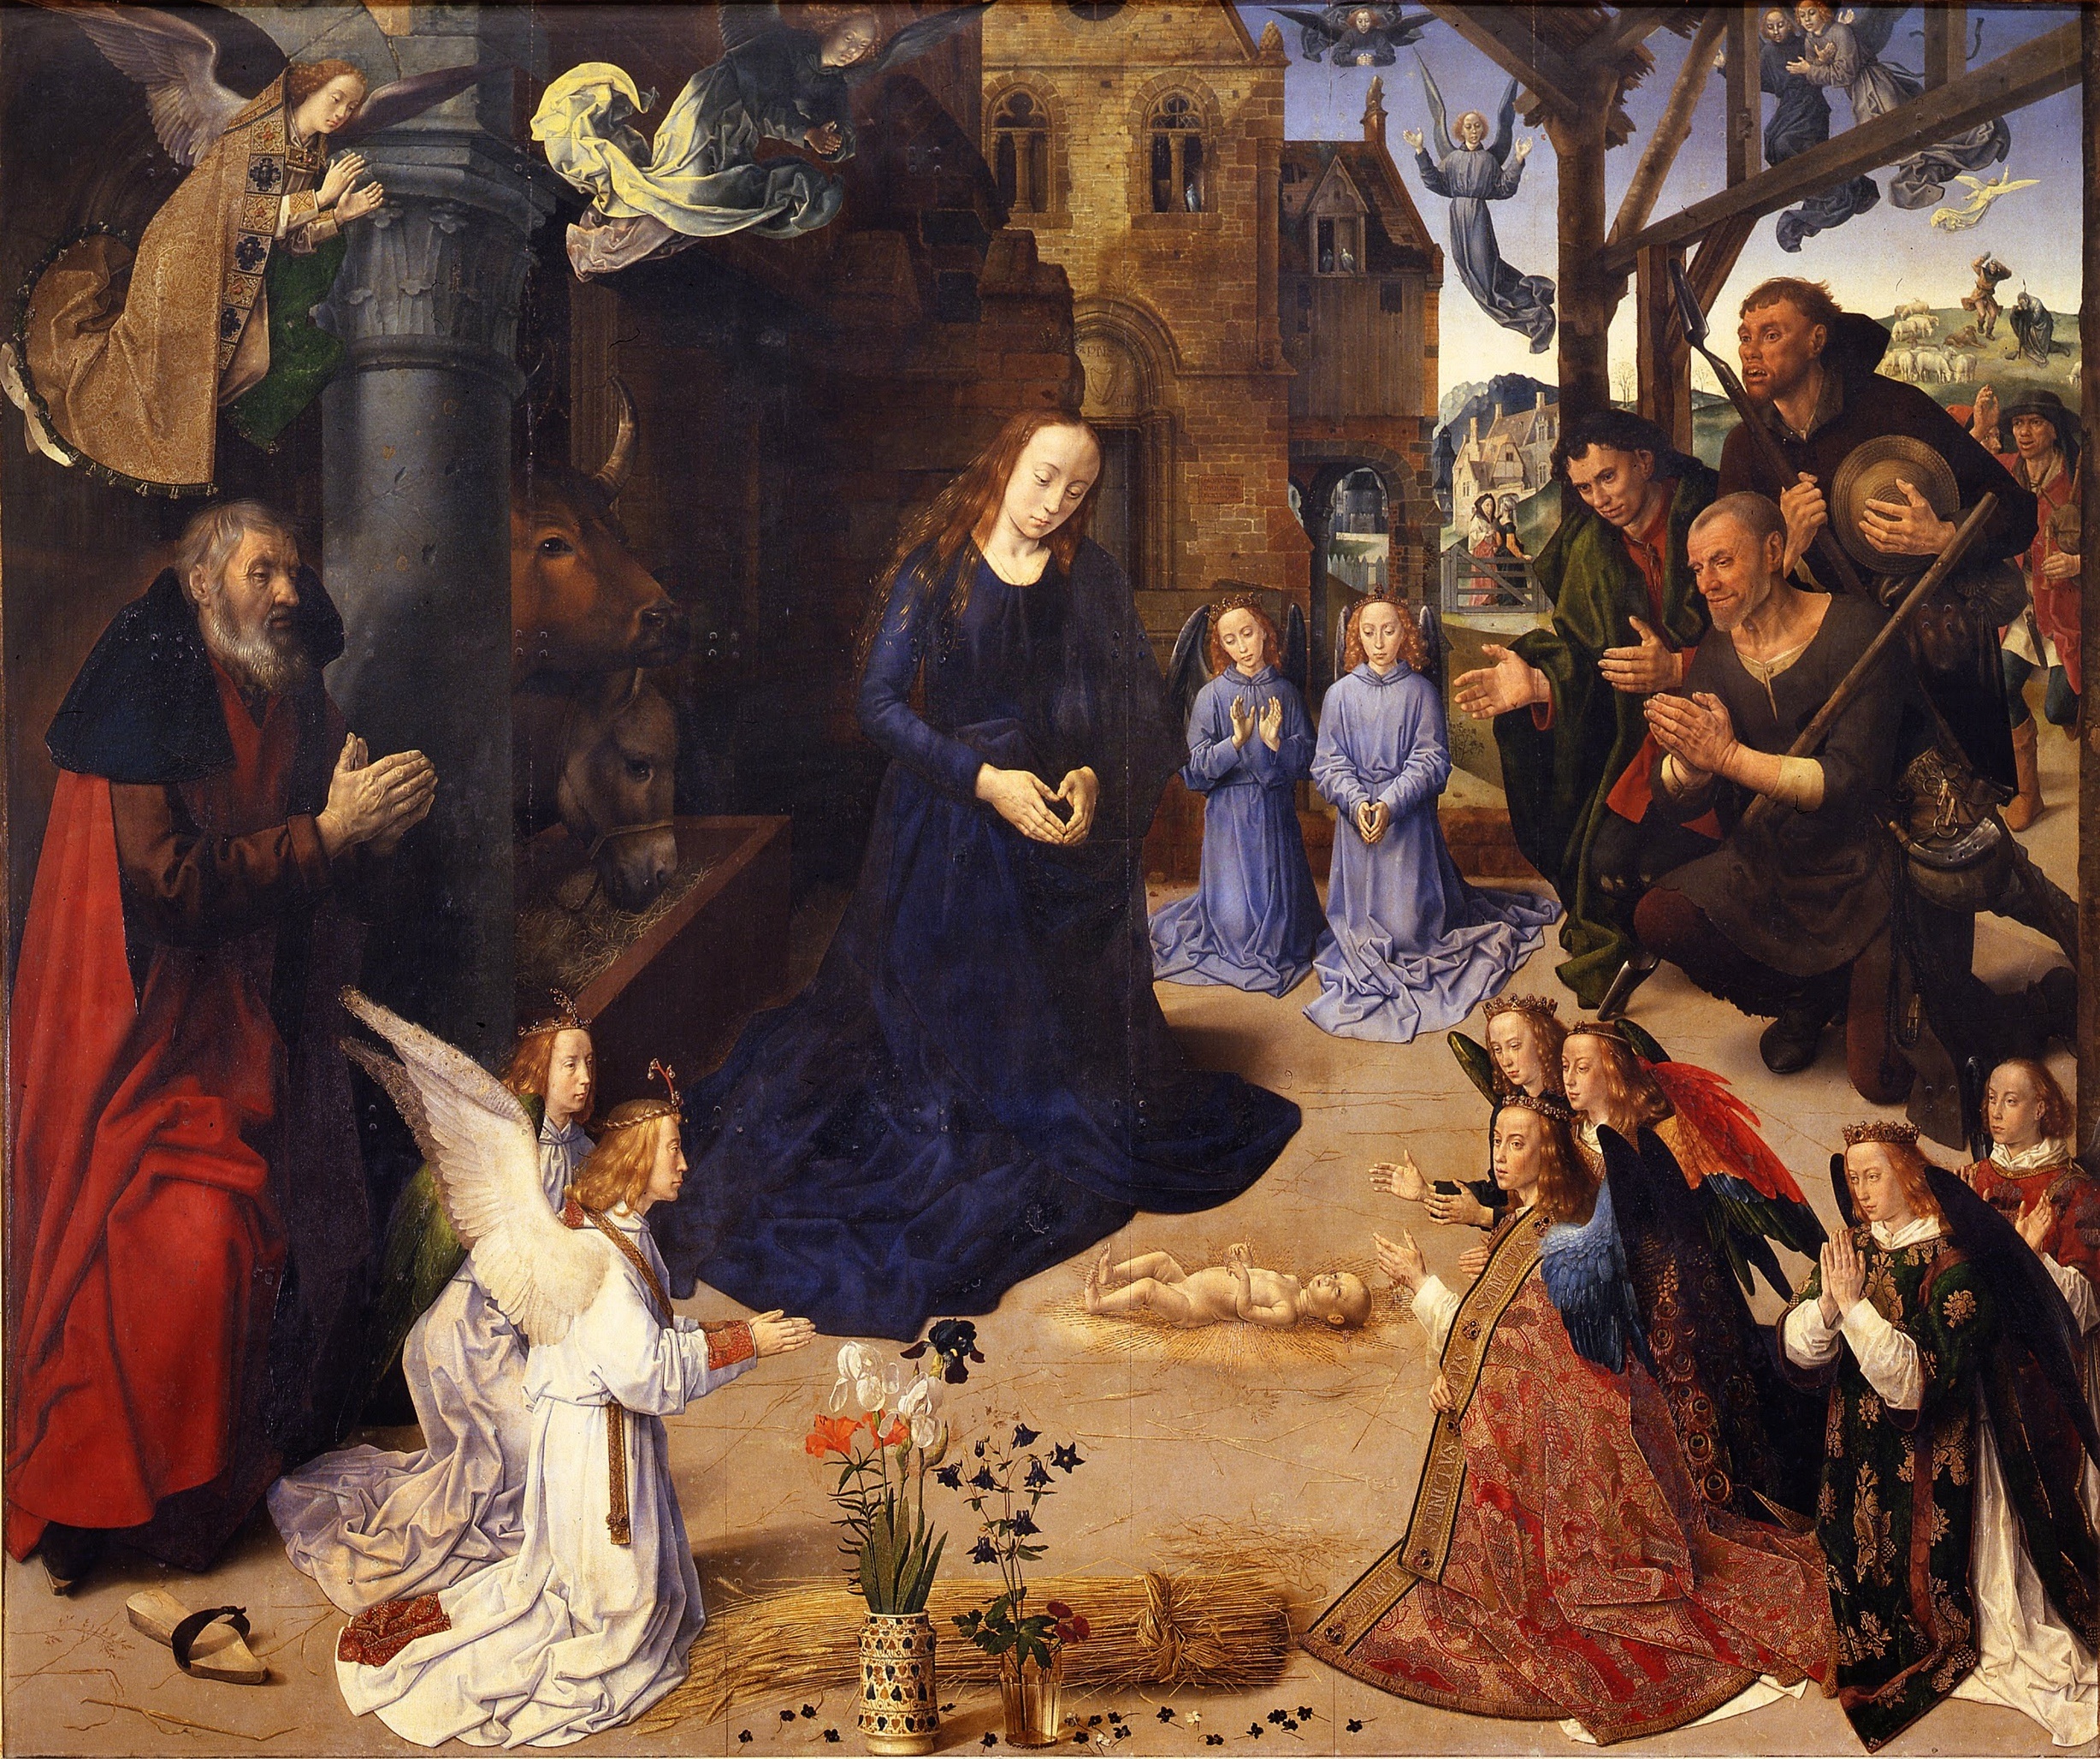 Hugo van der Goes, Portinari Altarpiece, center panel, c. 1476, oil on wood, 274 x 652 cm when open (Uffizi)